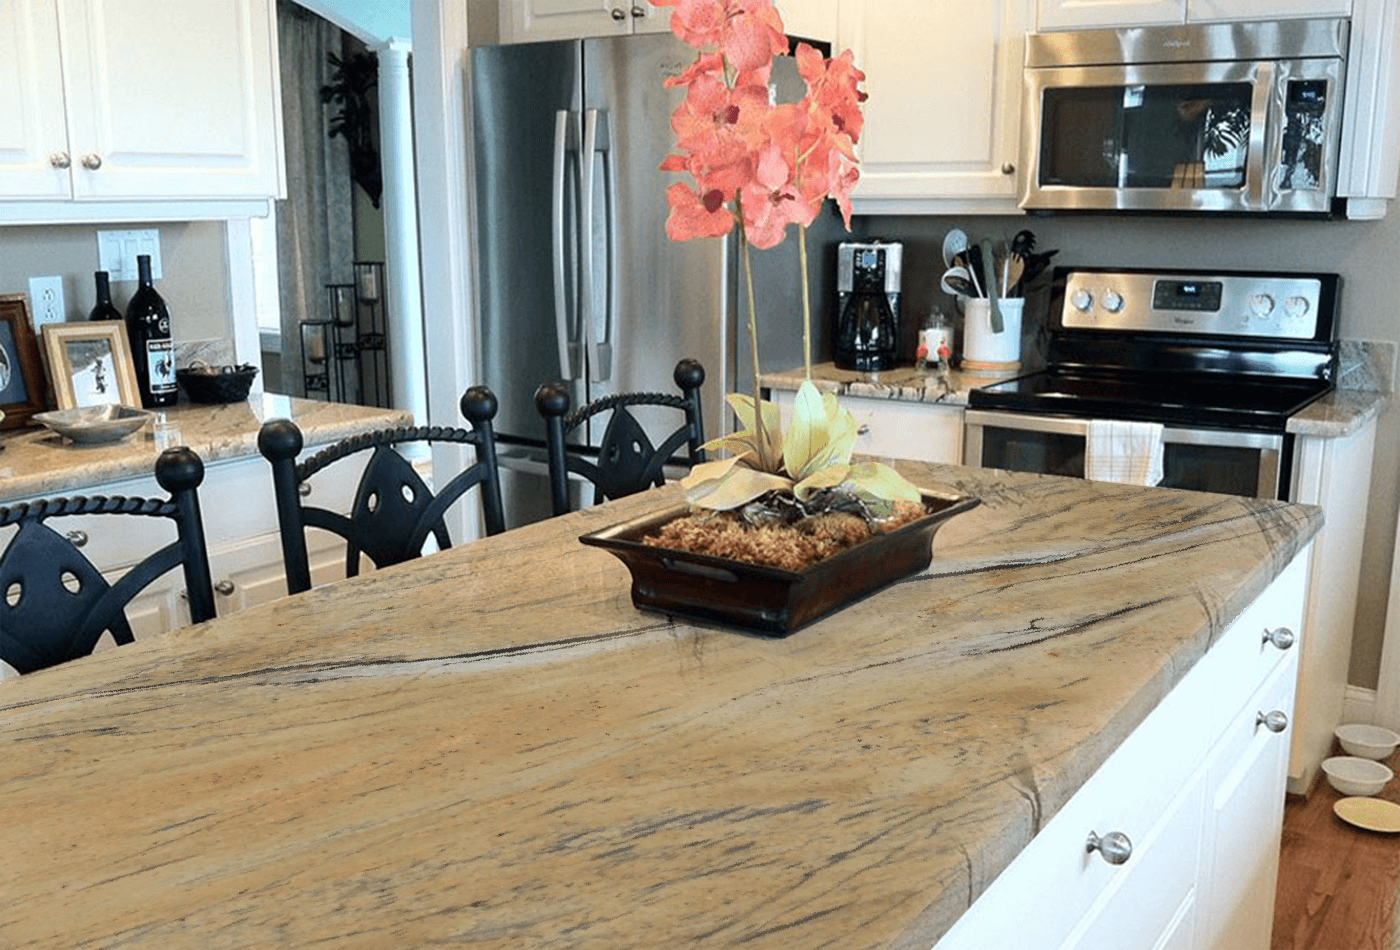 Prada Gold Granite; Homeowners Choice for Their Kitchen